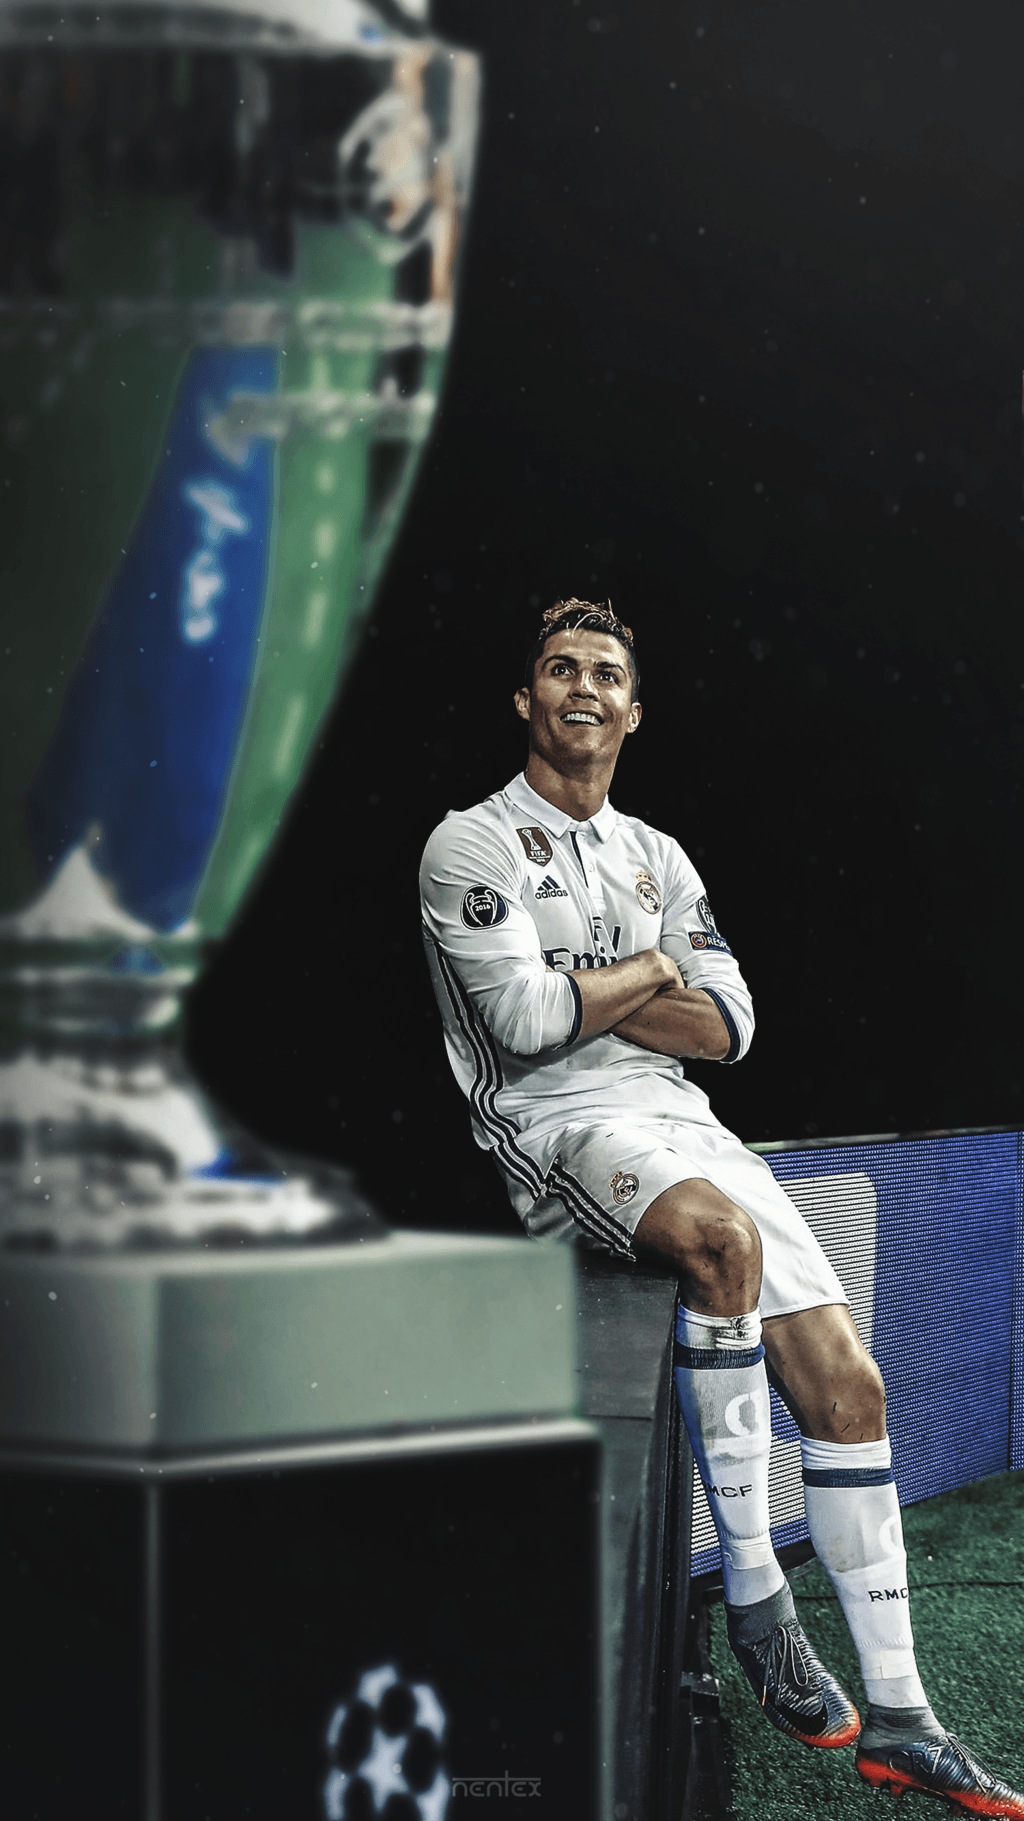 Ronaldo Champions League Wallpapers Wallpaper Cave